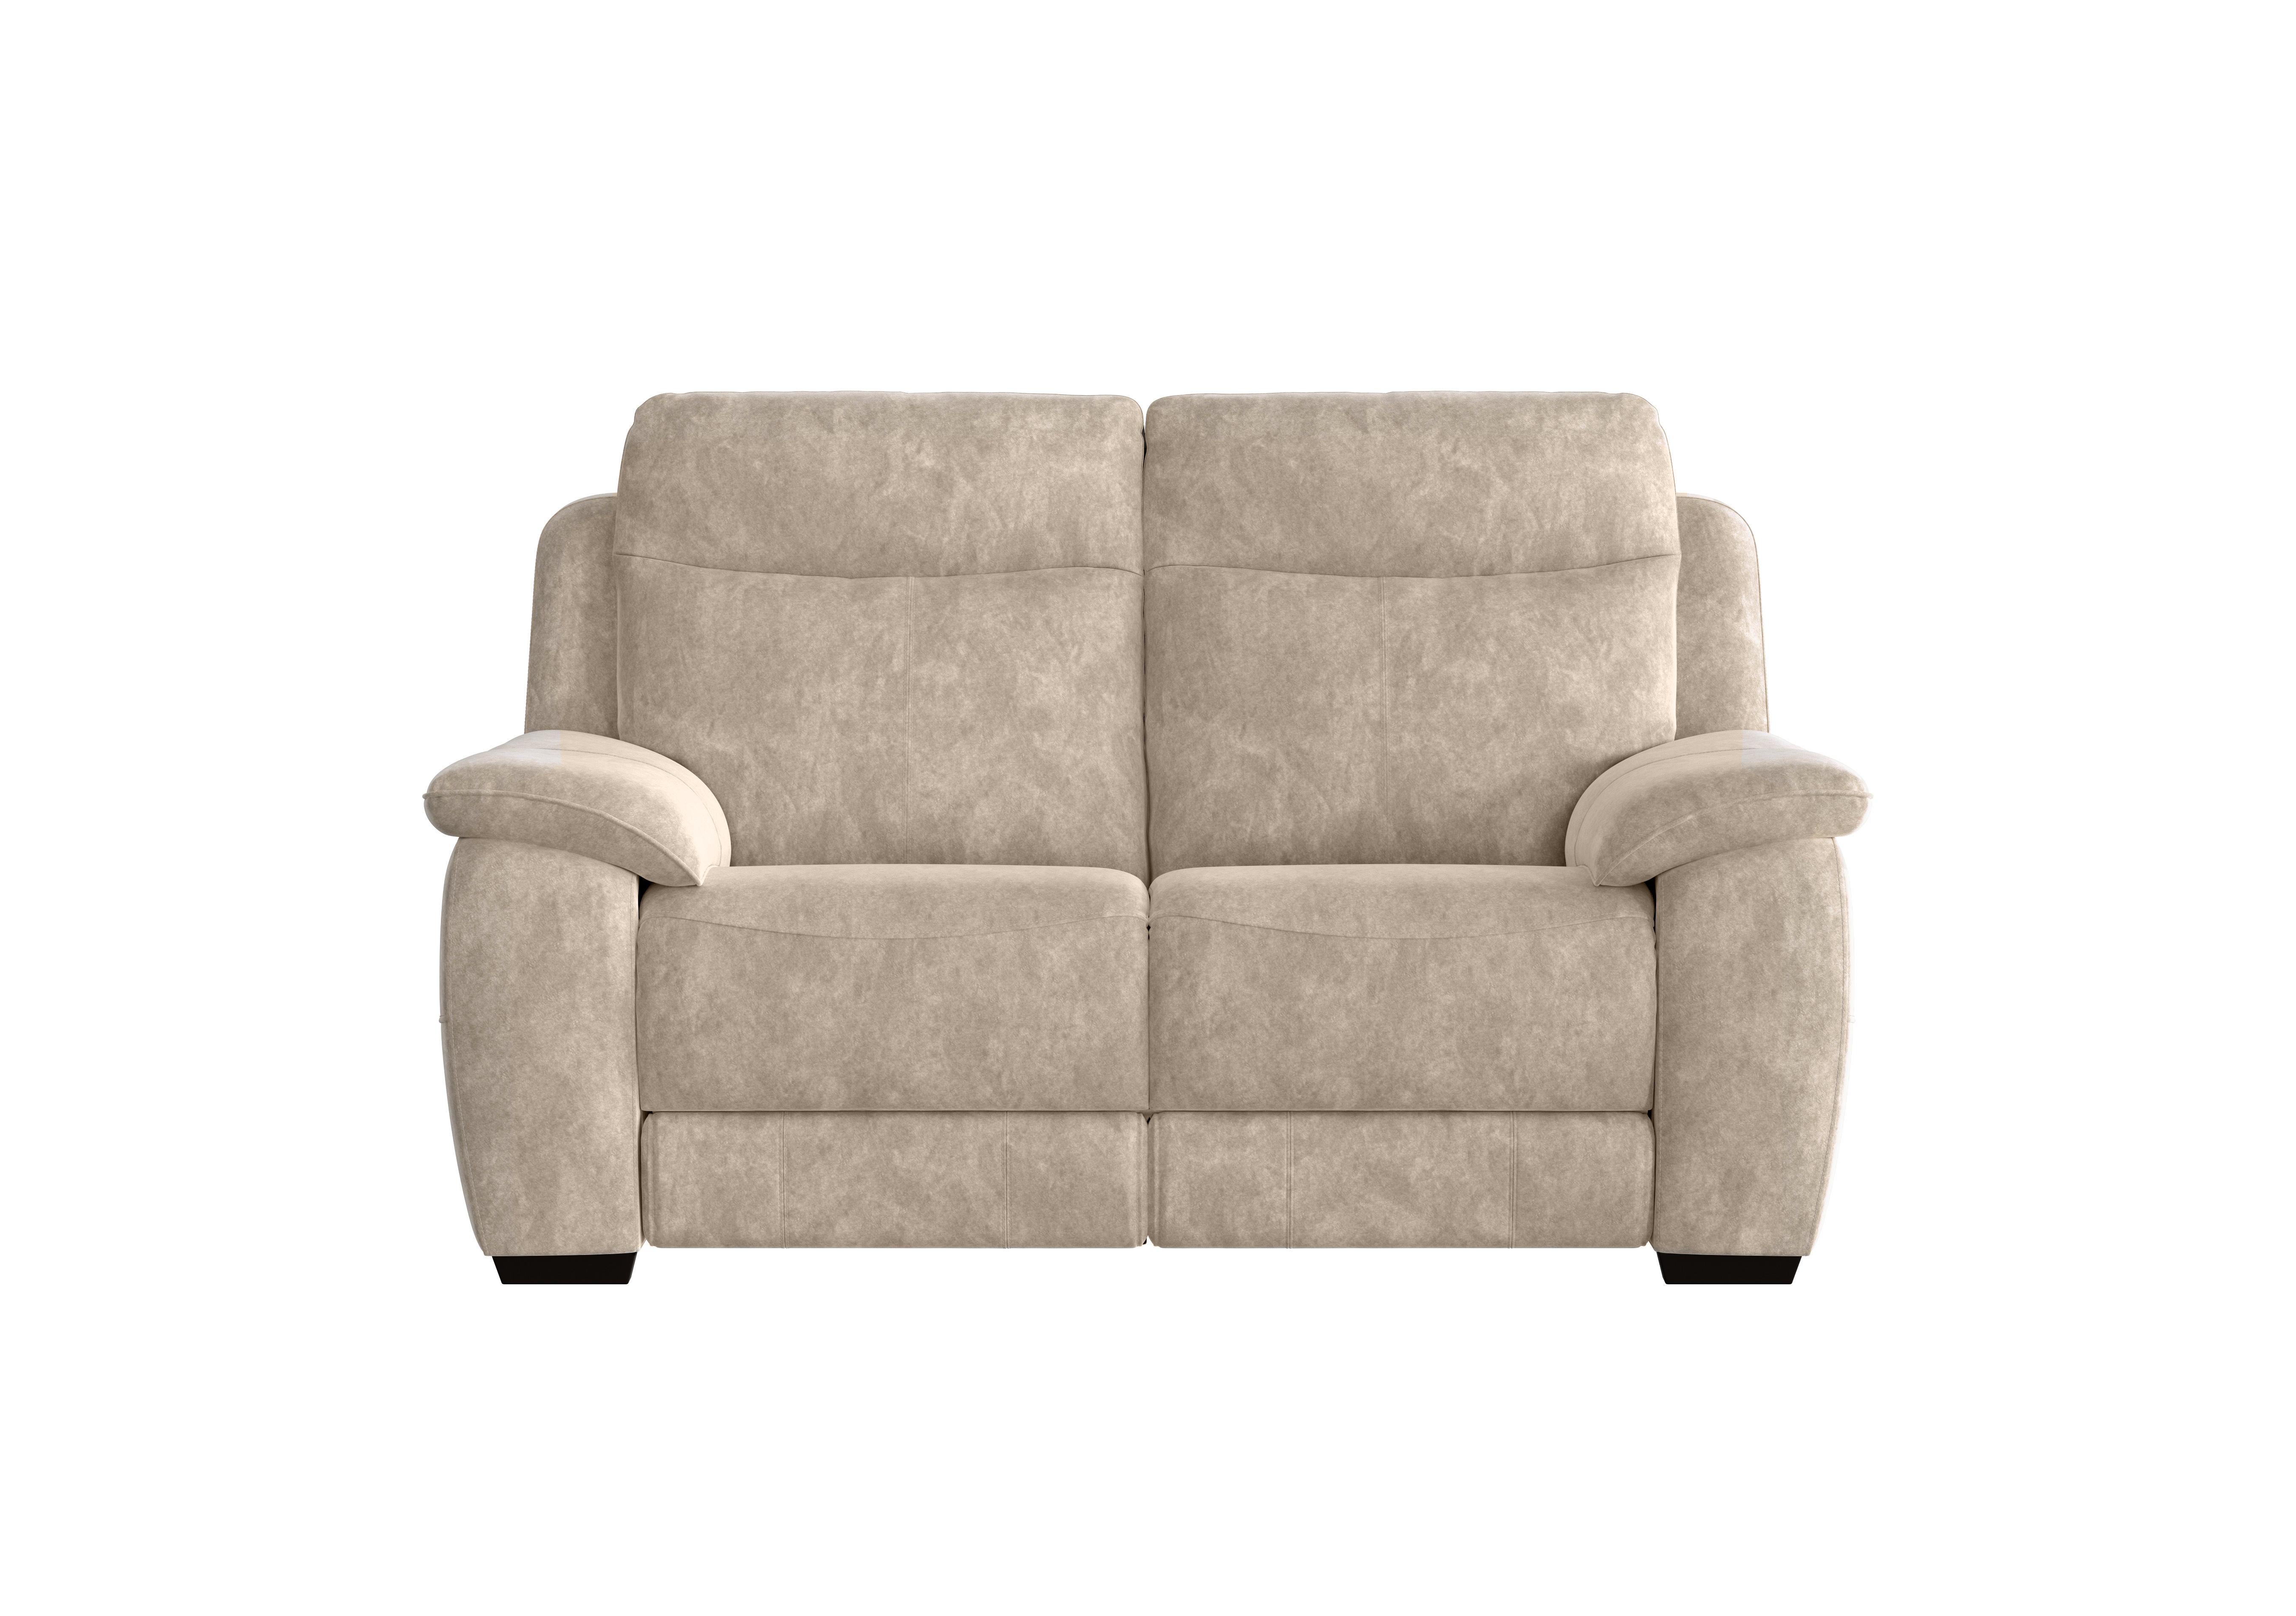 Starlight Express 2 Seater Fabric Sofa in Bfa-Bnn-R26 Fv2 Cream on Furniture Village